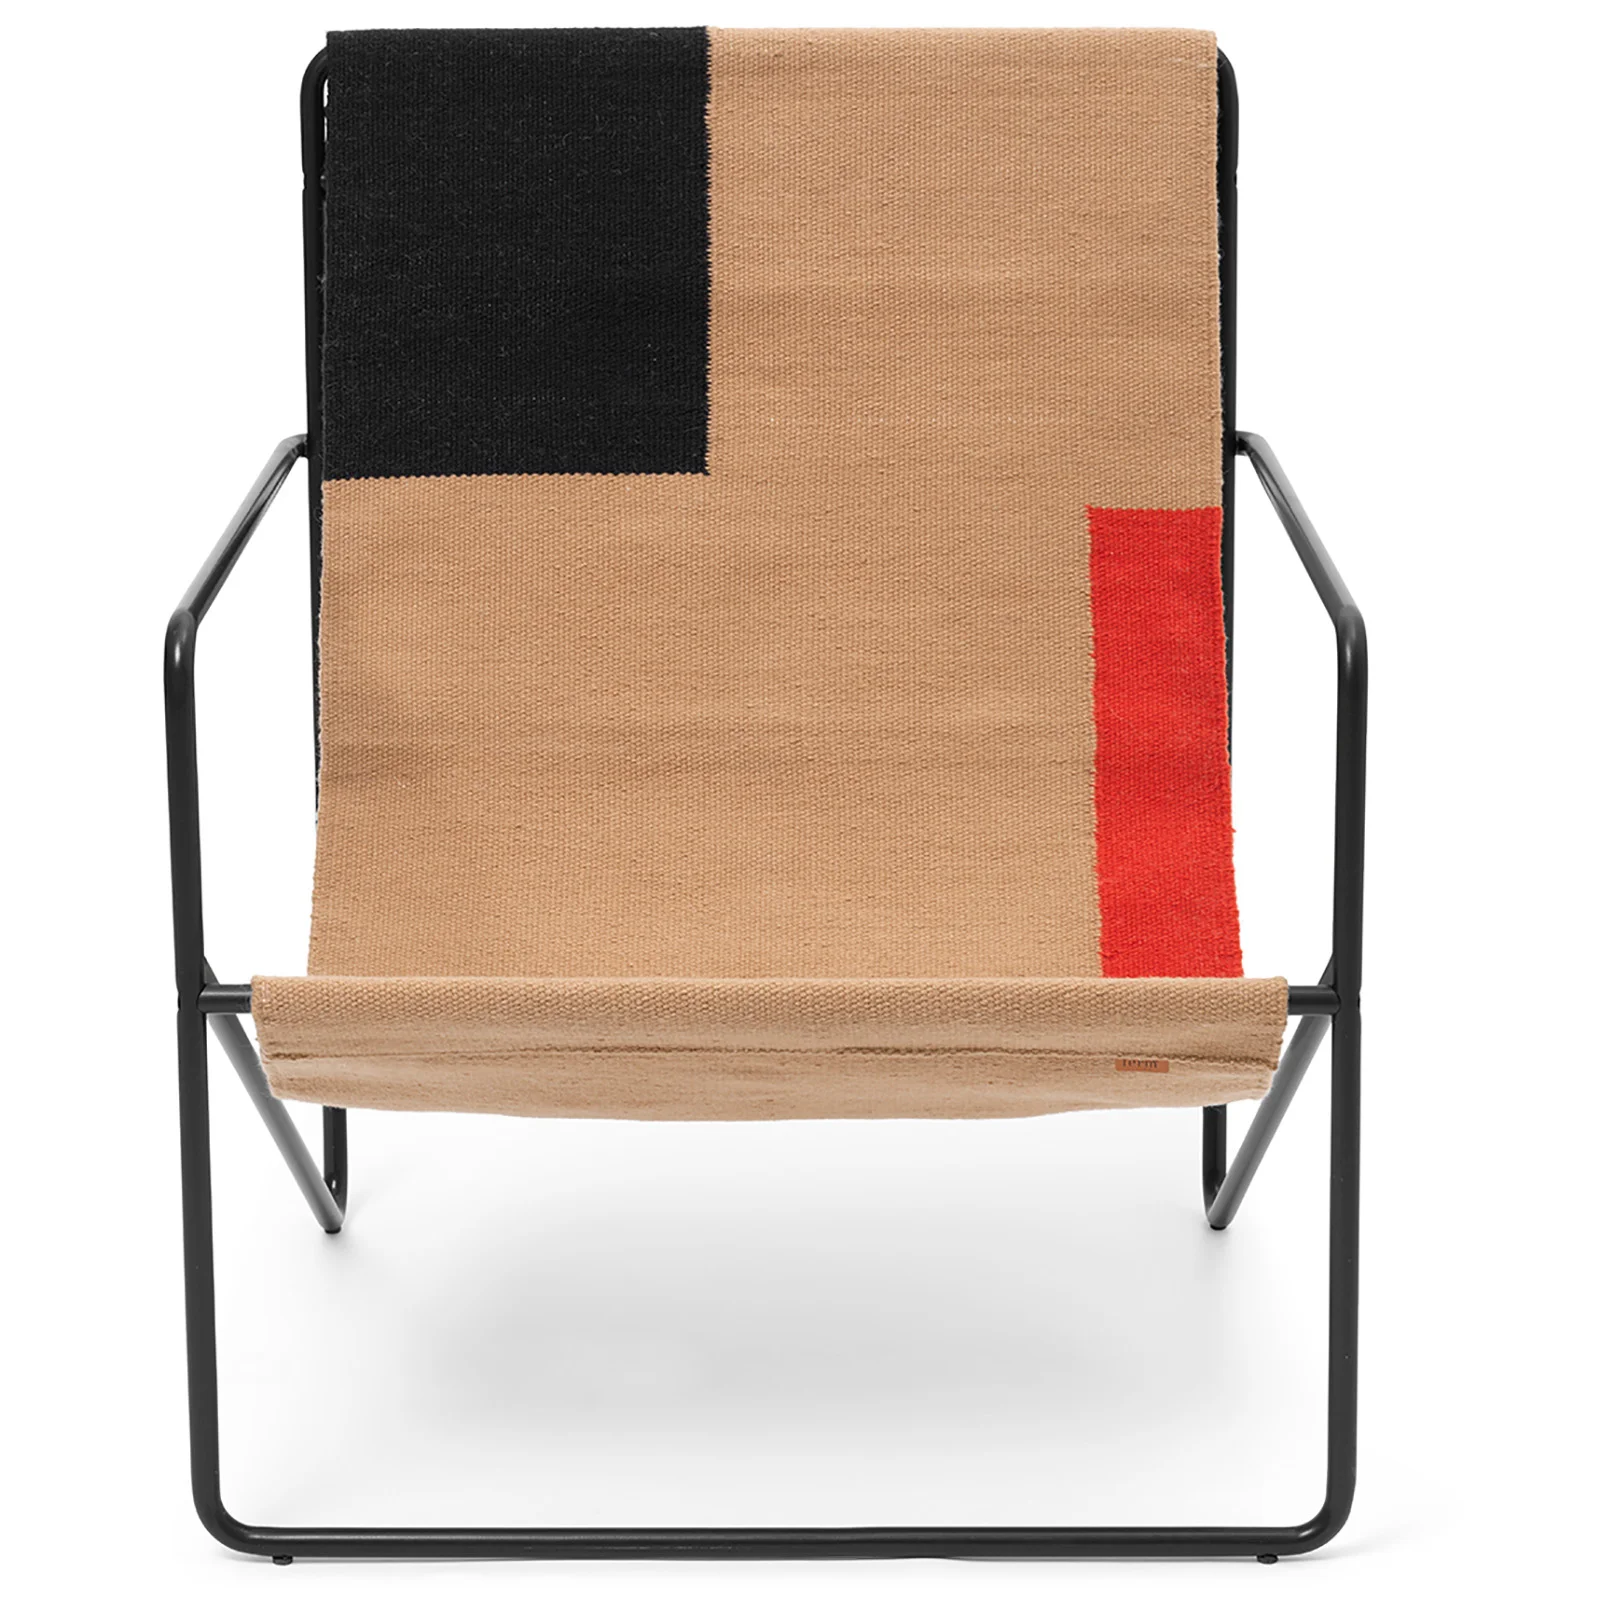 Ferm Living Desert Lounge Chair - Black/Block Image 1